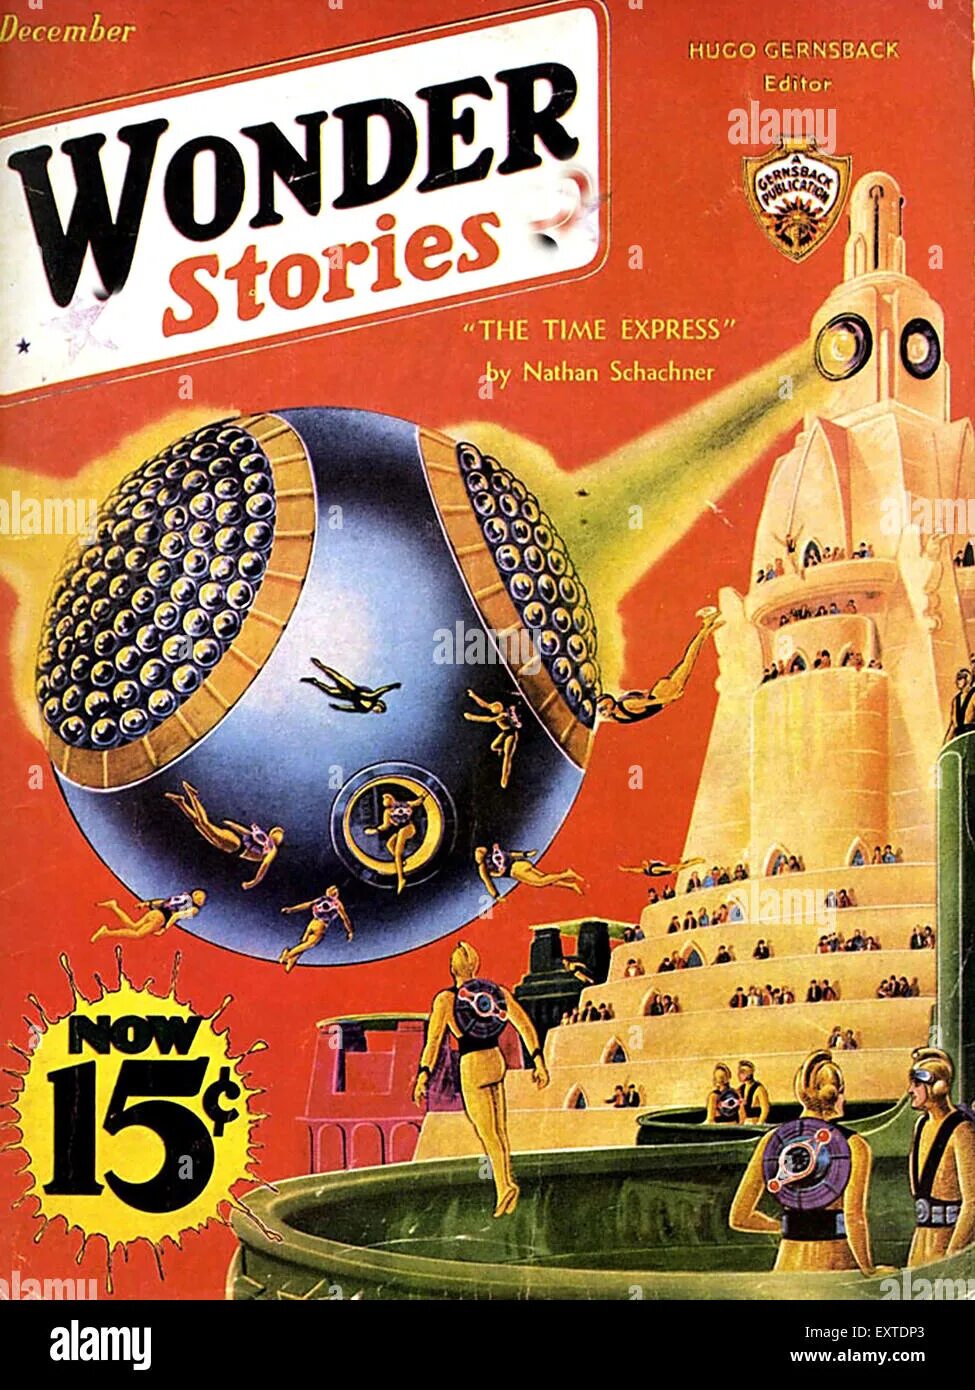 Wonder Magazine Series 1984. World of Wonder журнал. Wonder stories. World of Wonder журнал на русском. Air wonder